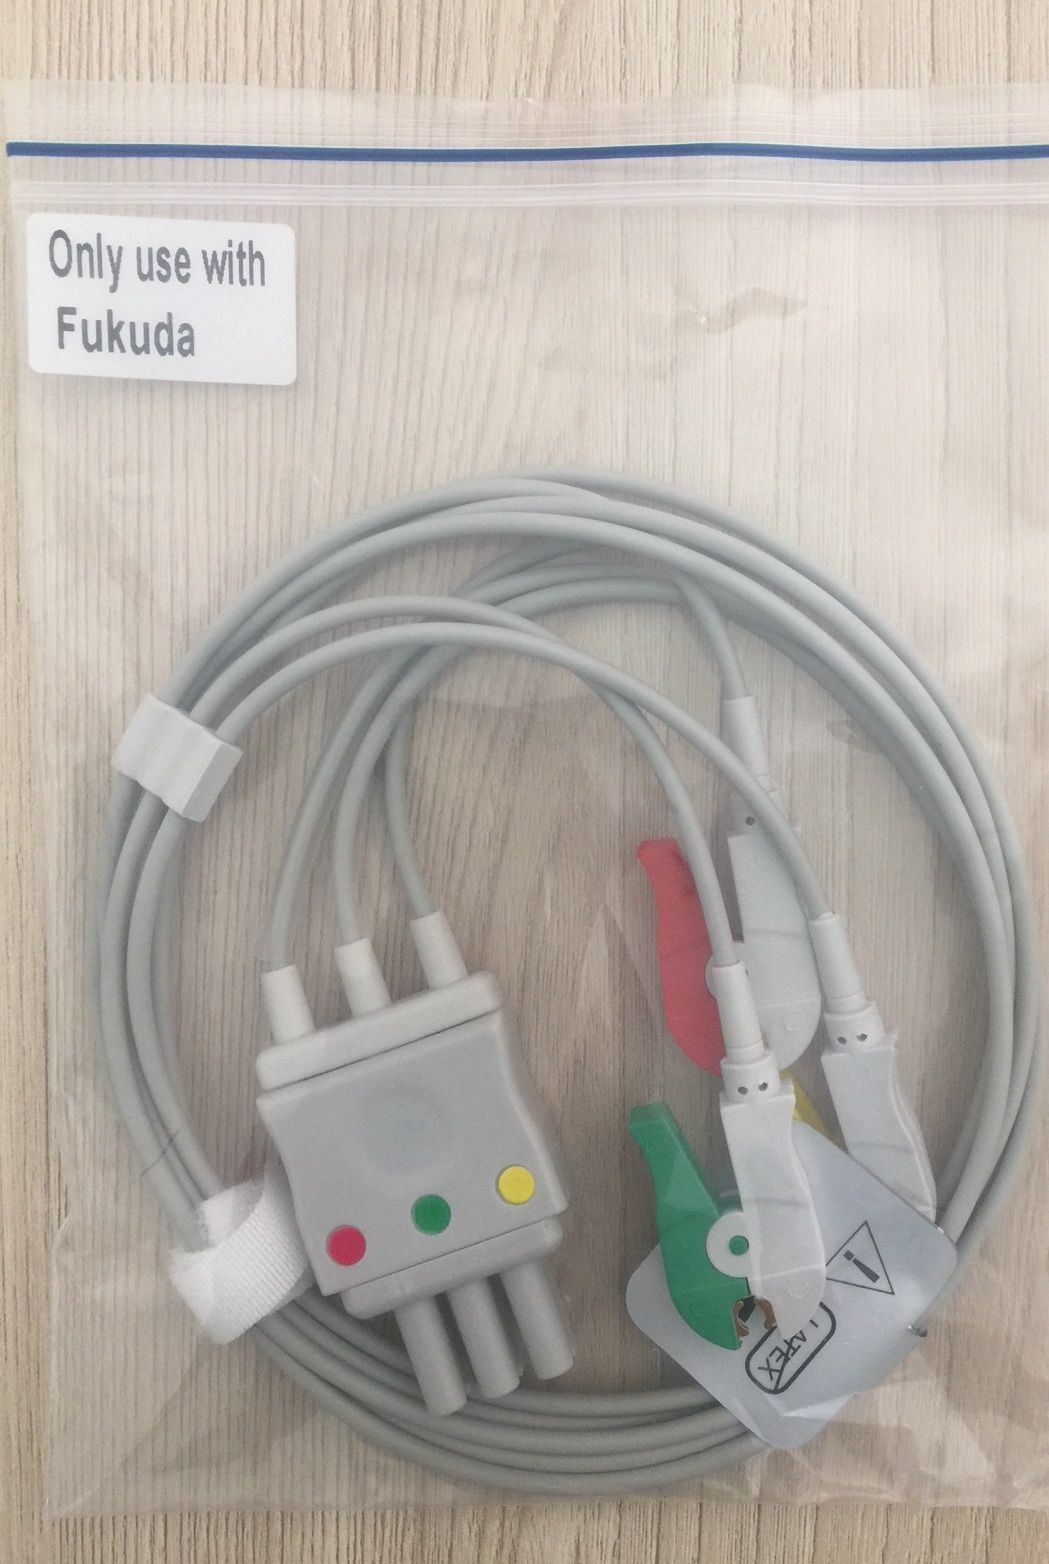 ECG 3 lead wires probe for Fukuda DS-7100_สายหลีดอีซีจี ECG ลีด สำหรับเครื่องวัดสัญญาณชีพผู้ป่วย Fukuda DS-7100